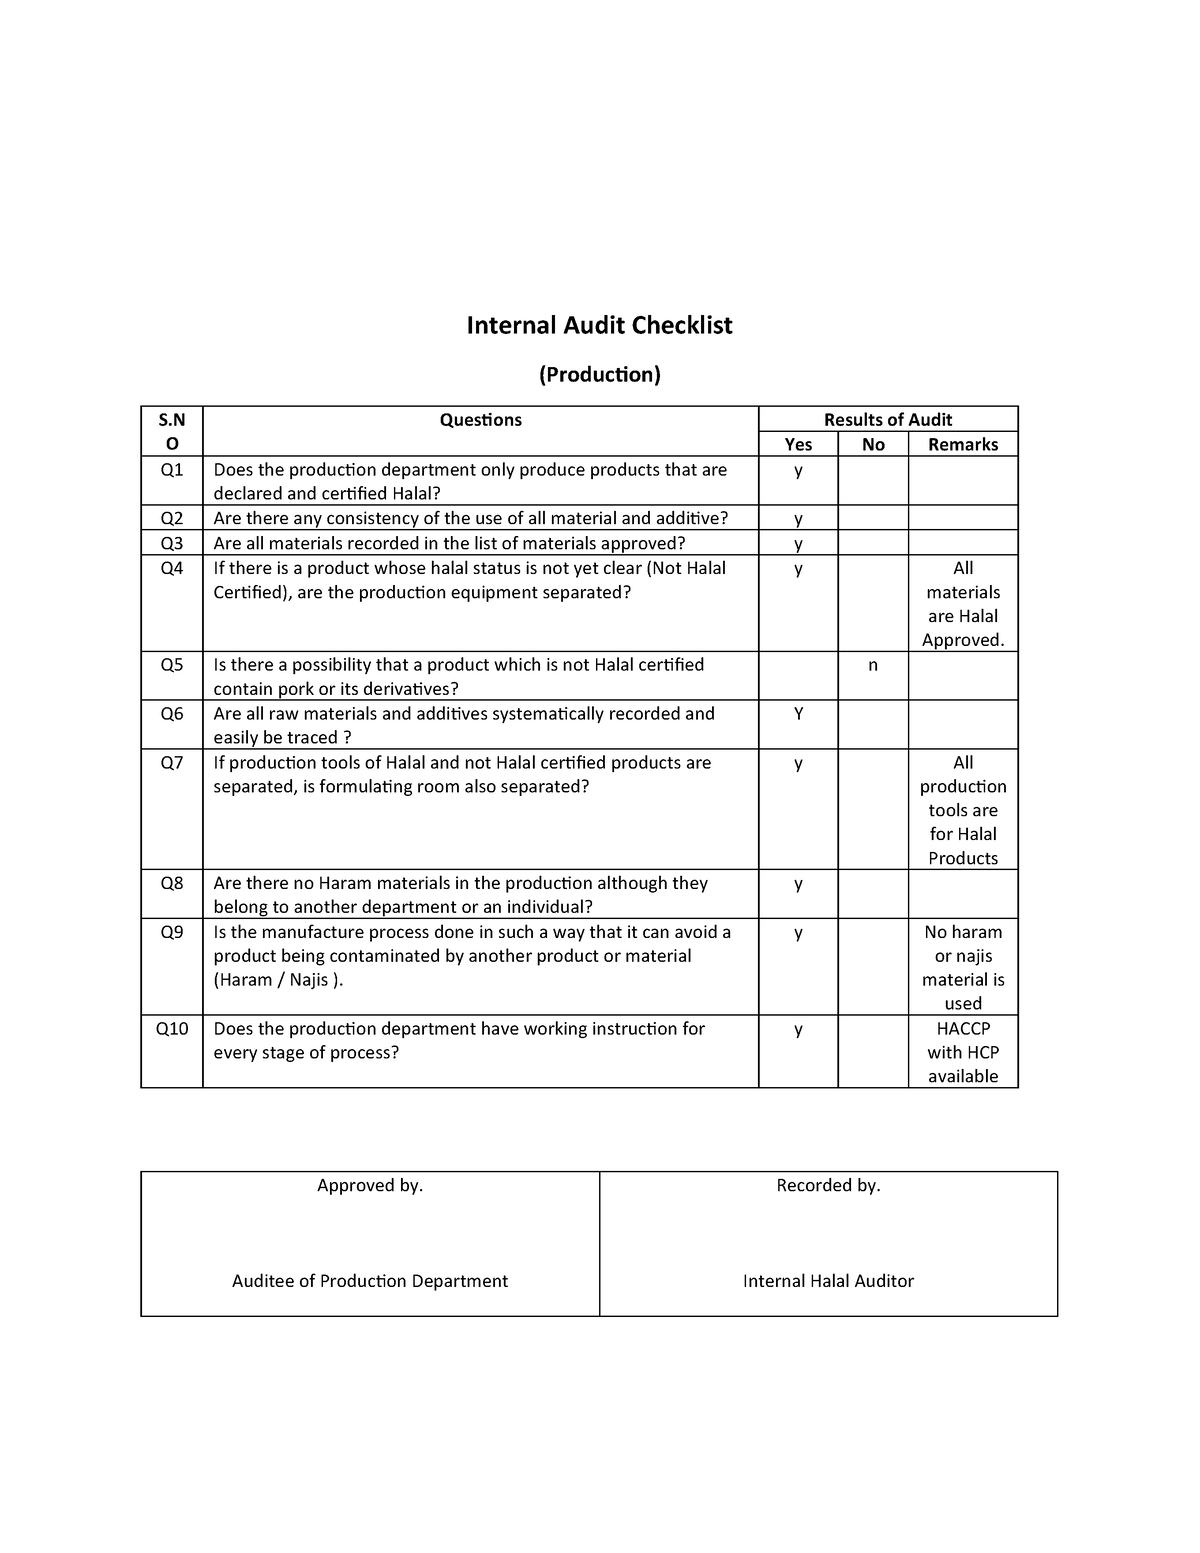 Internal Audit Checklist Halal Production Compress Internal Audit